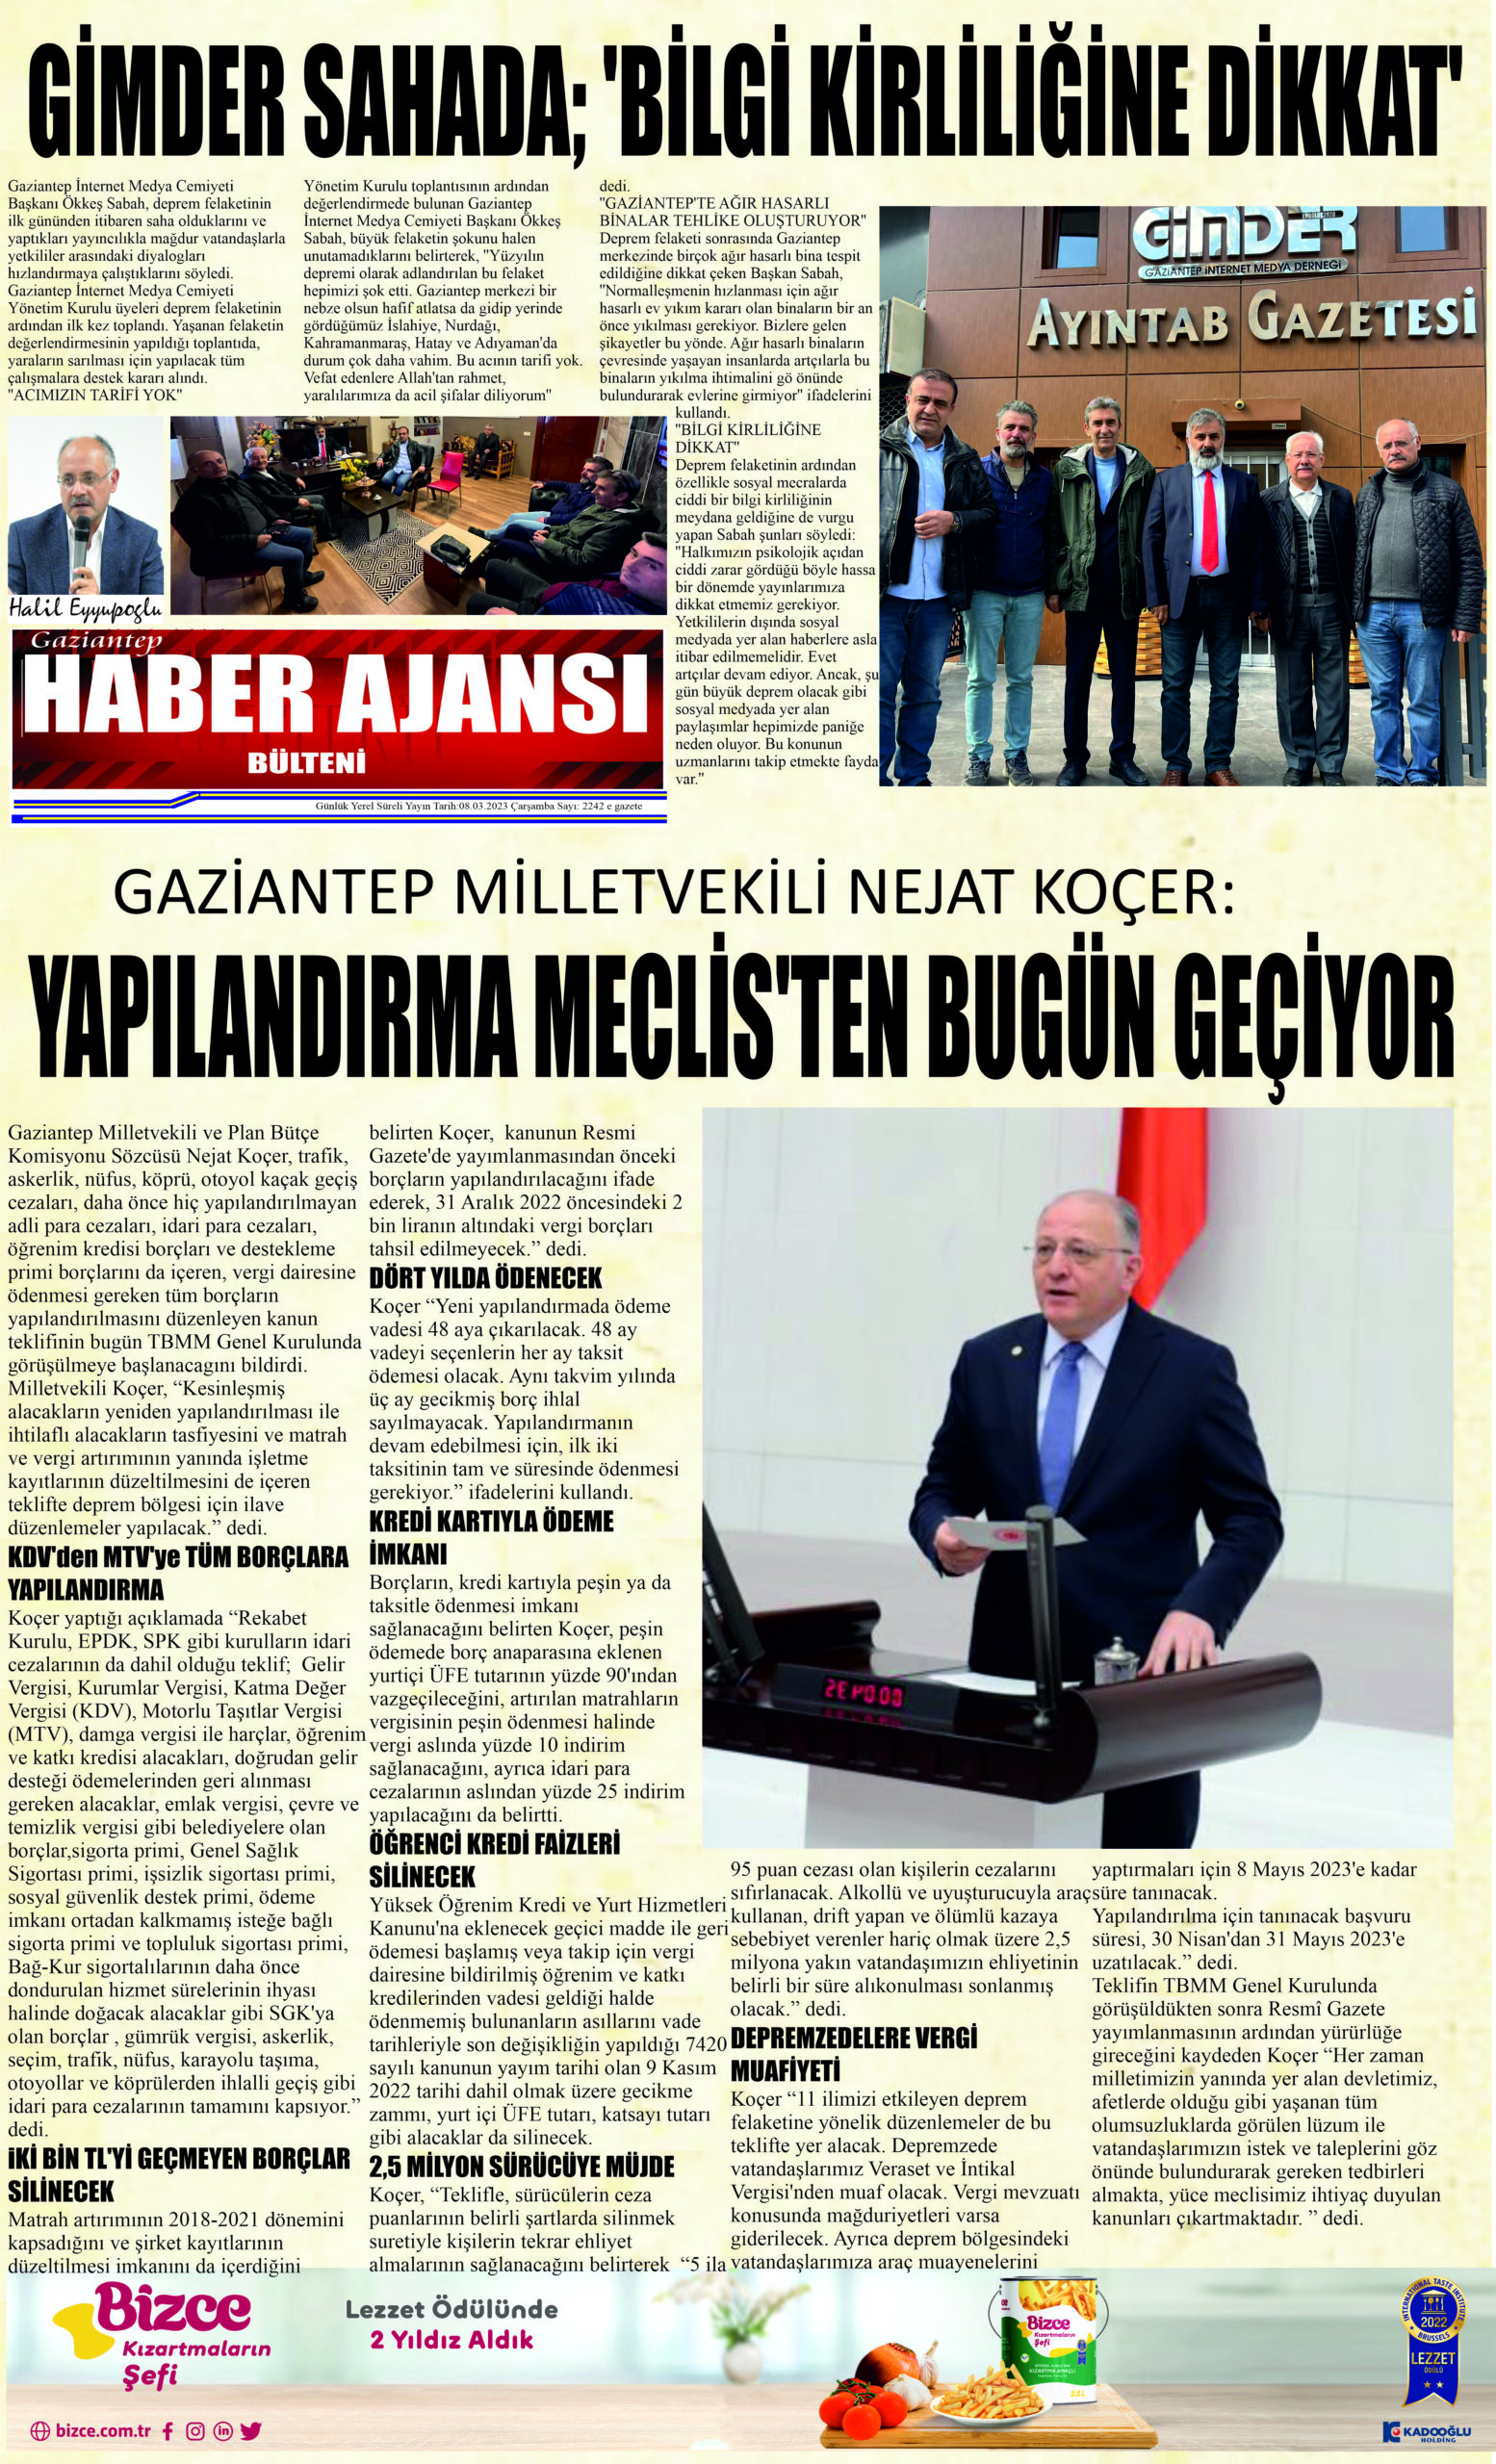 Gaziantep Haber Ajansı Bülteni Çarşamba 08.03.2023 e gazete